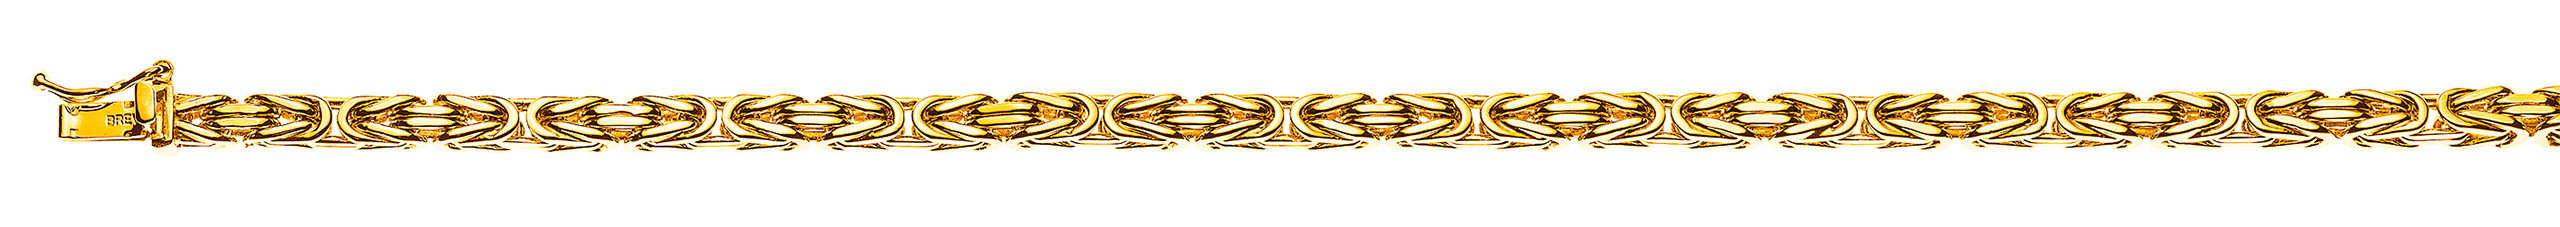 AURONOS Prestige Armband 18k Gelbgold Königskette 3.5mm 19cm